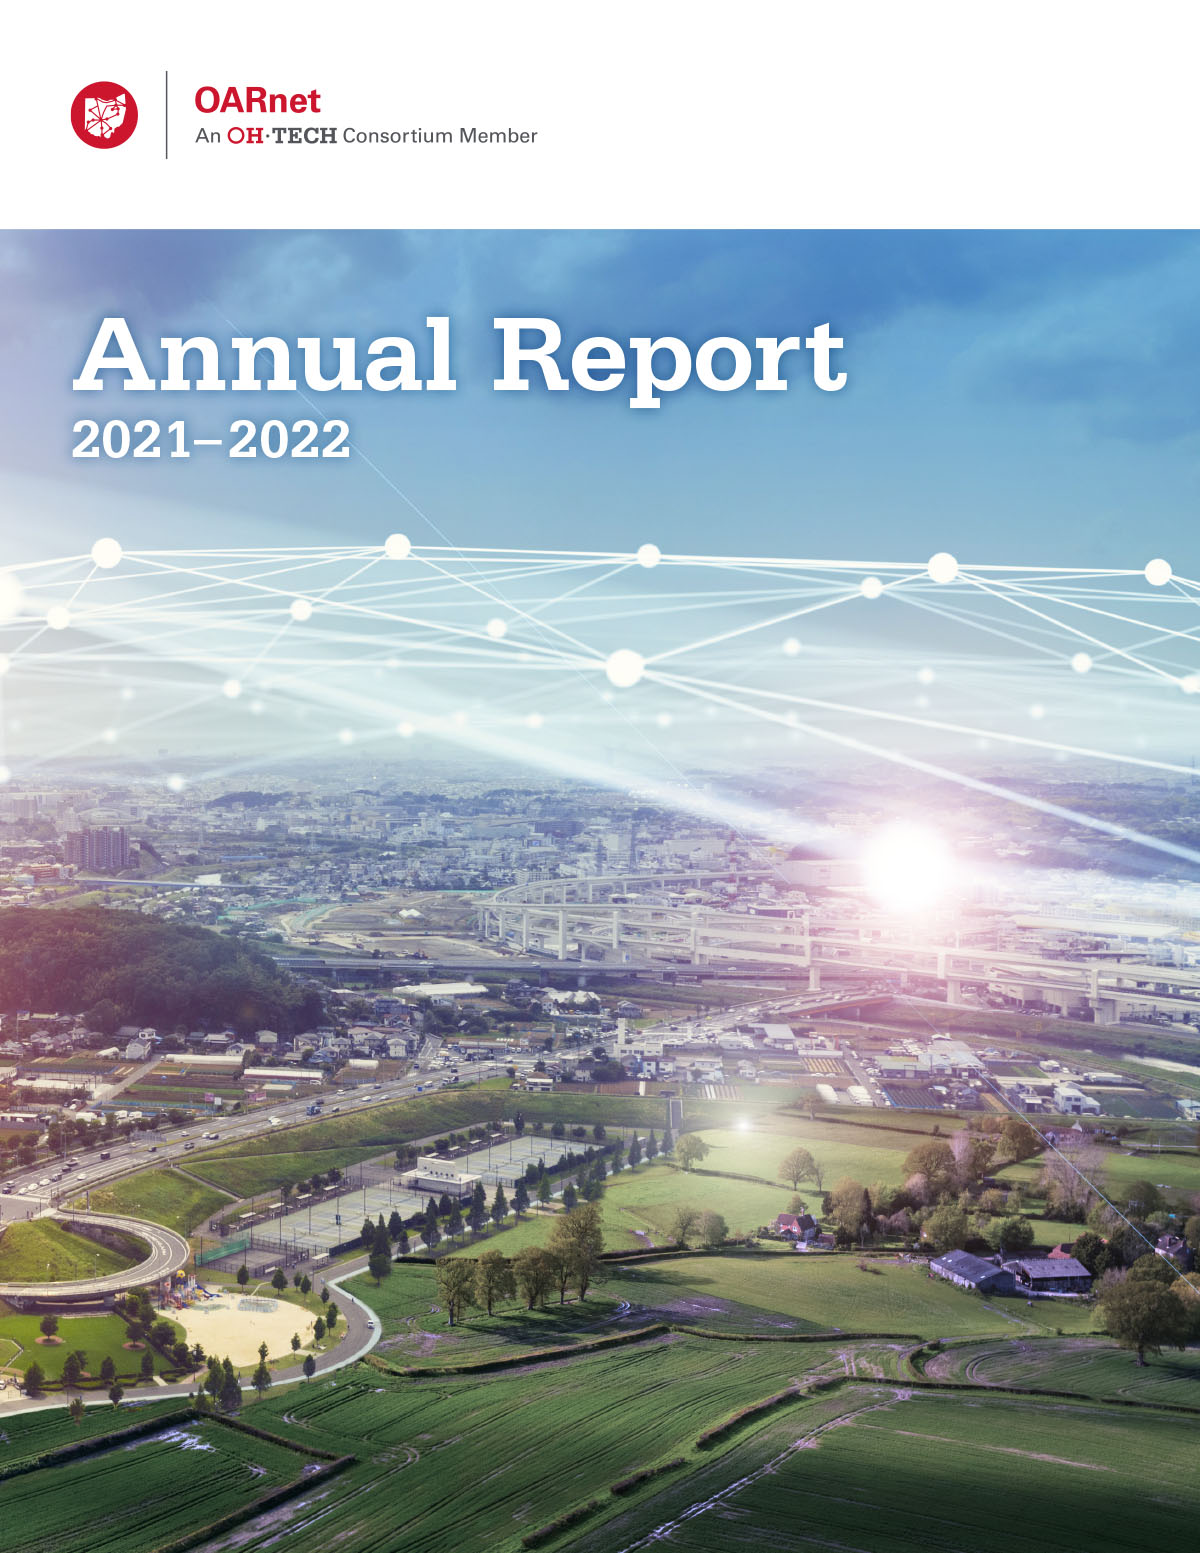 2021-22 OARnet Annual Report